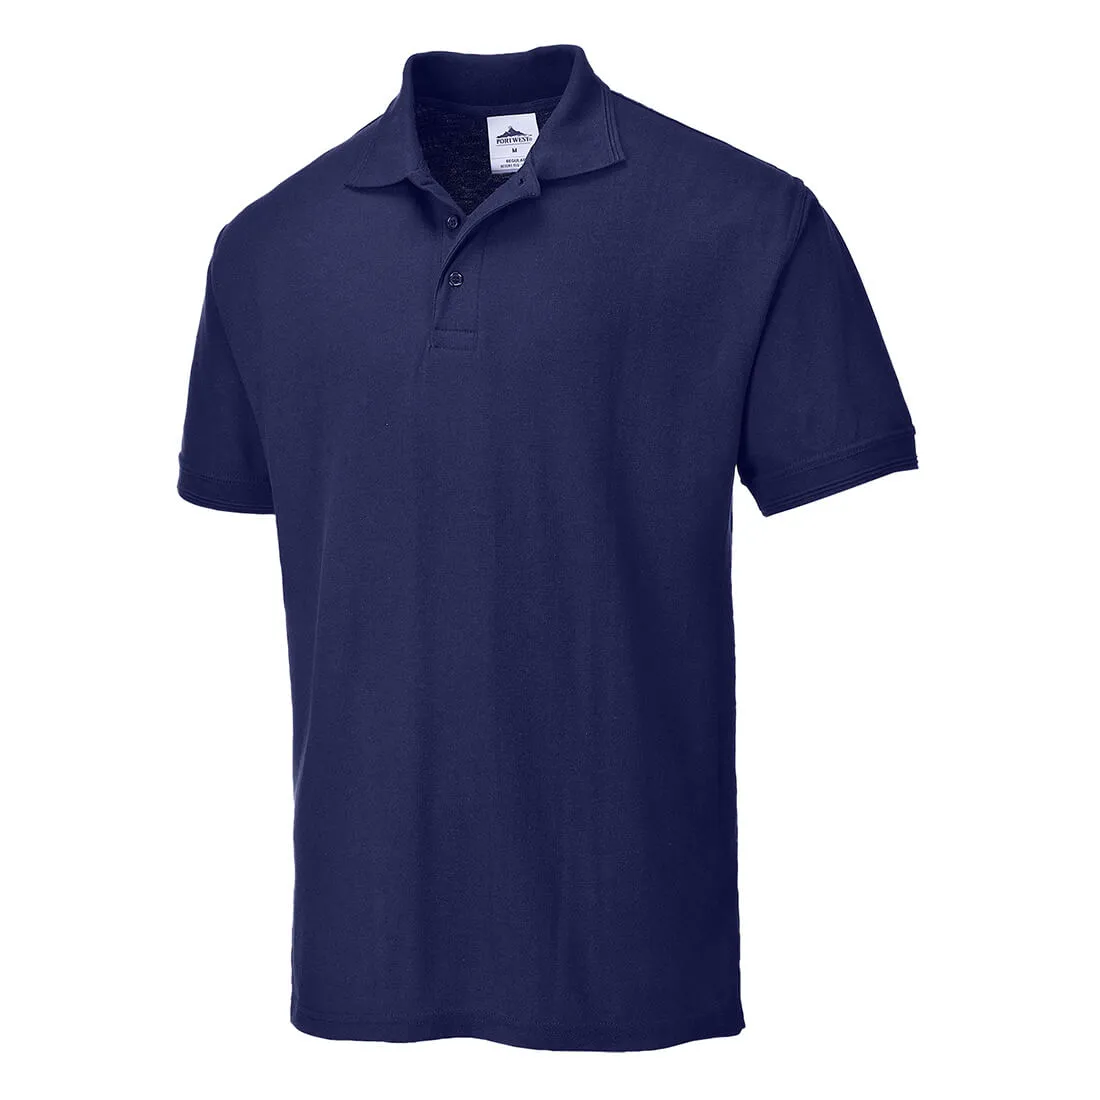 Portwest Naples Polo Shirt - Navy, S